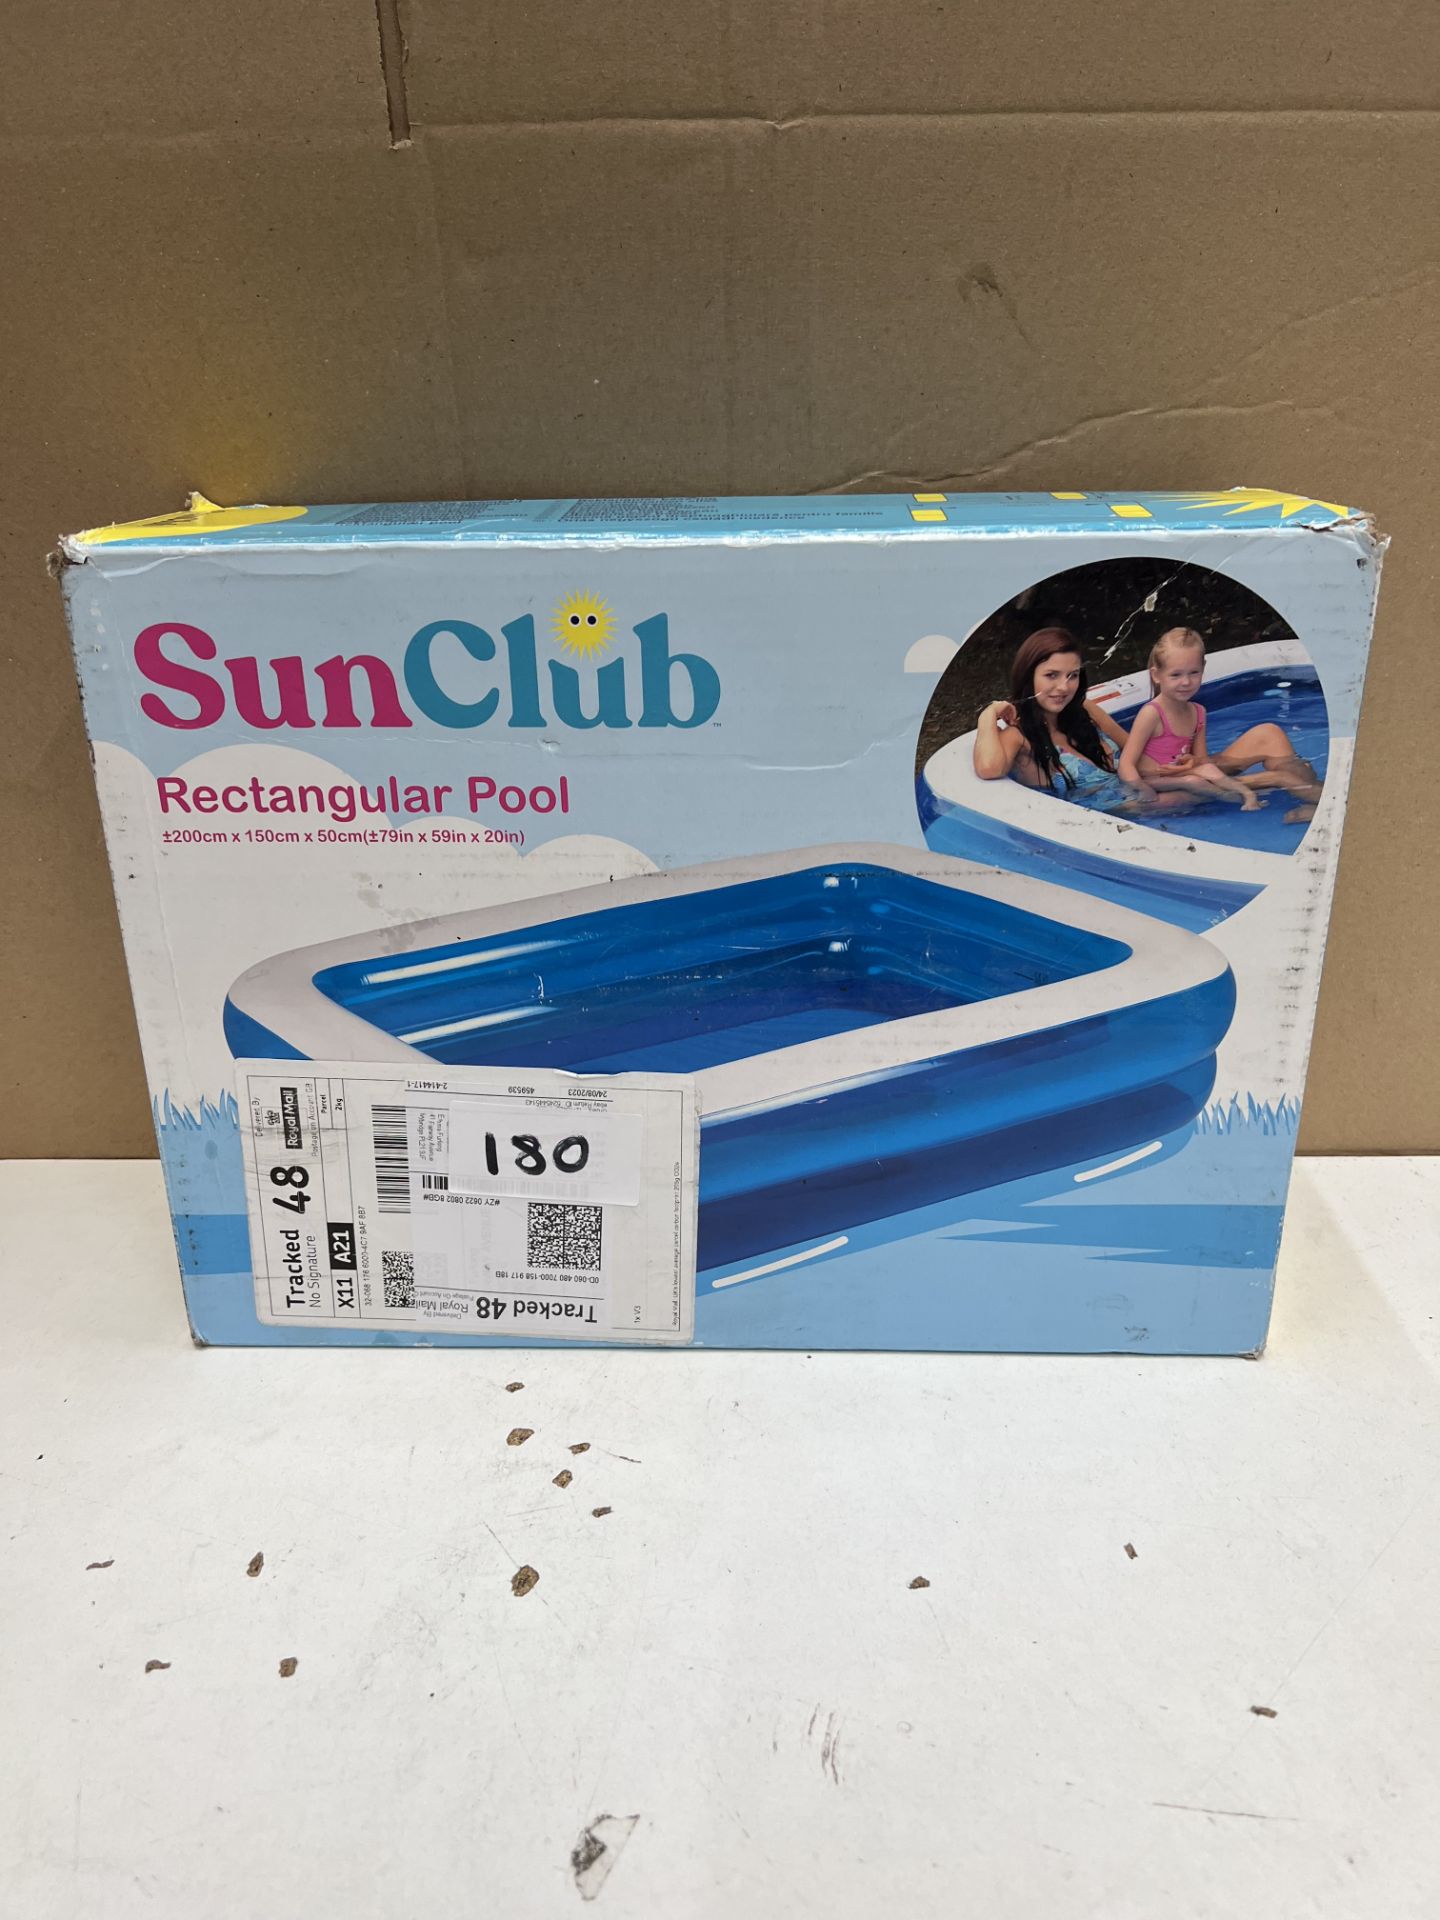 Sunclub Rectangular Pool. RRP £30 - Grade U